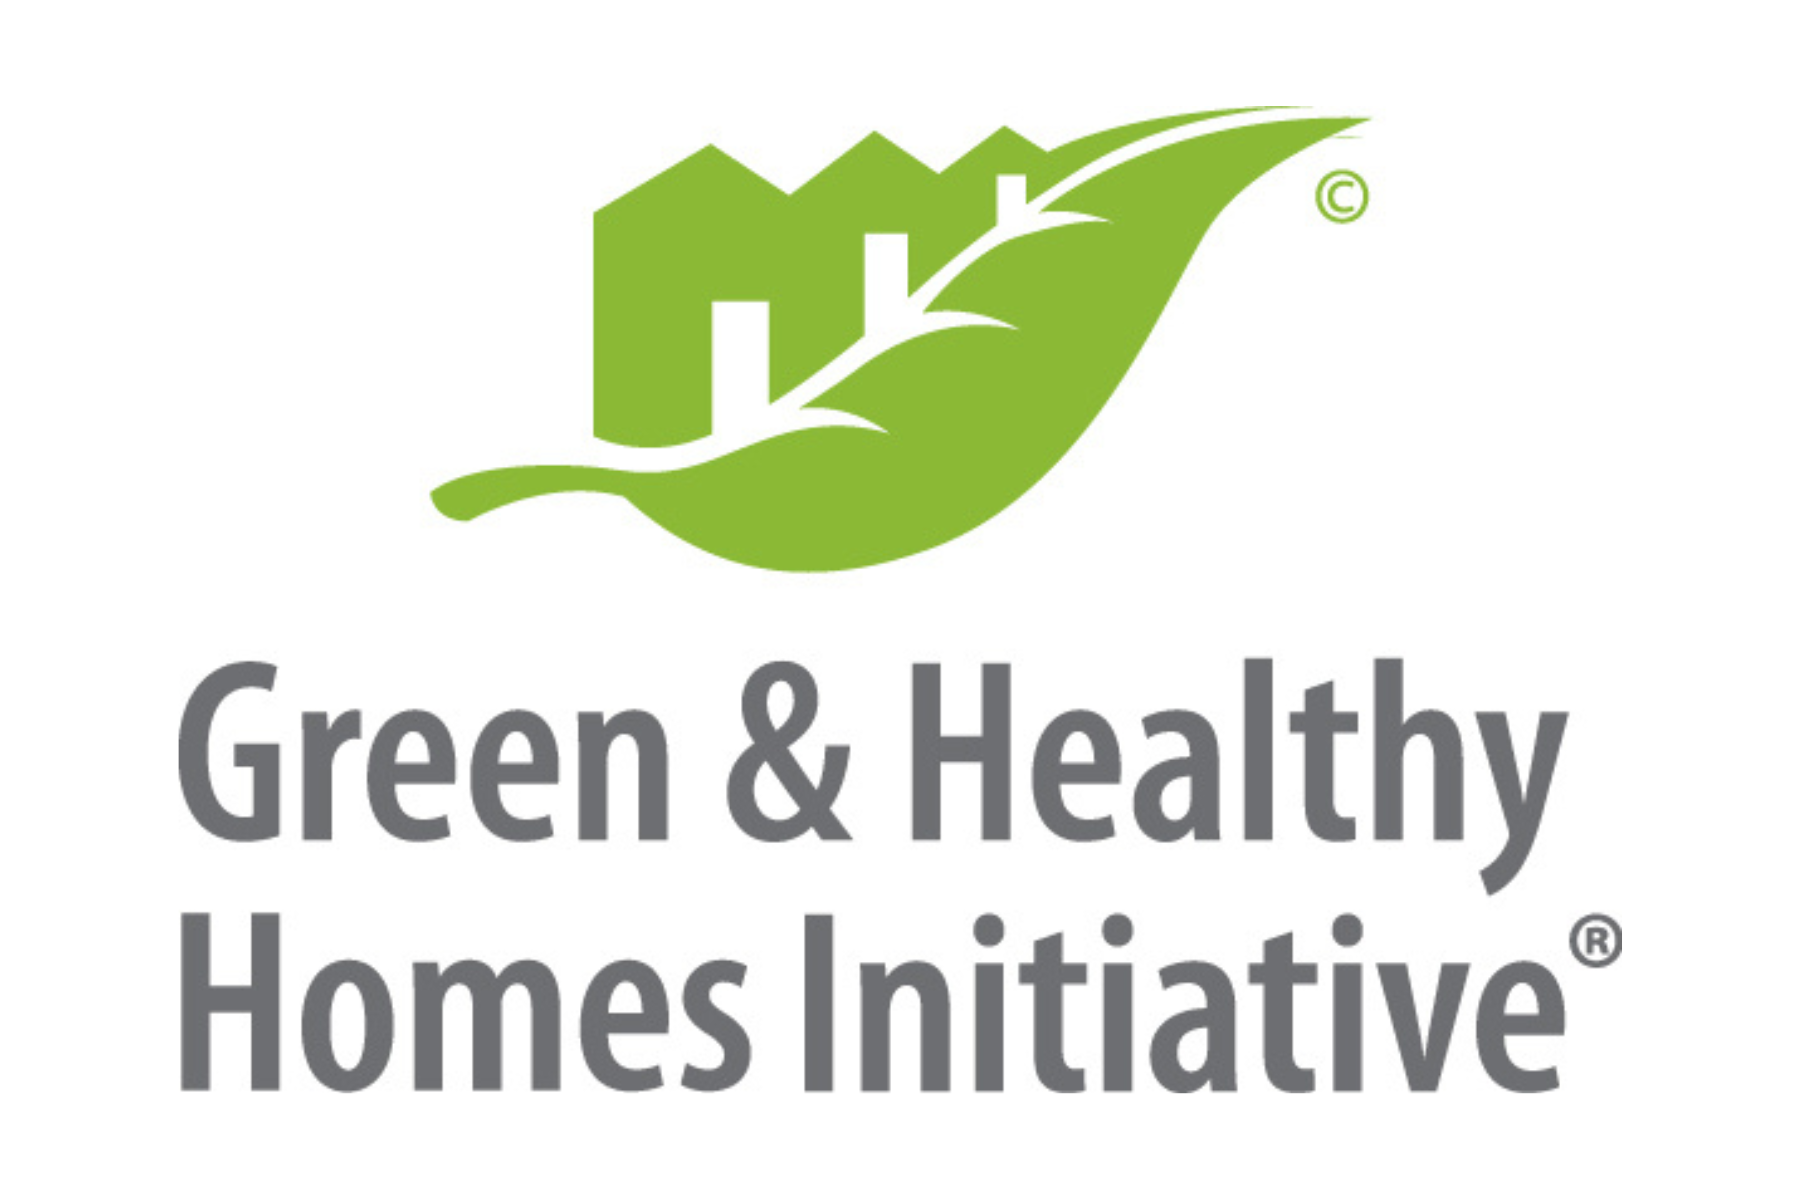 Green & Healthy Homes Initiative